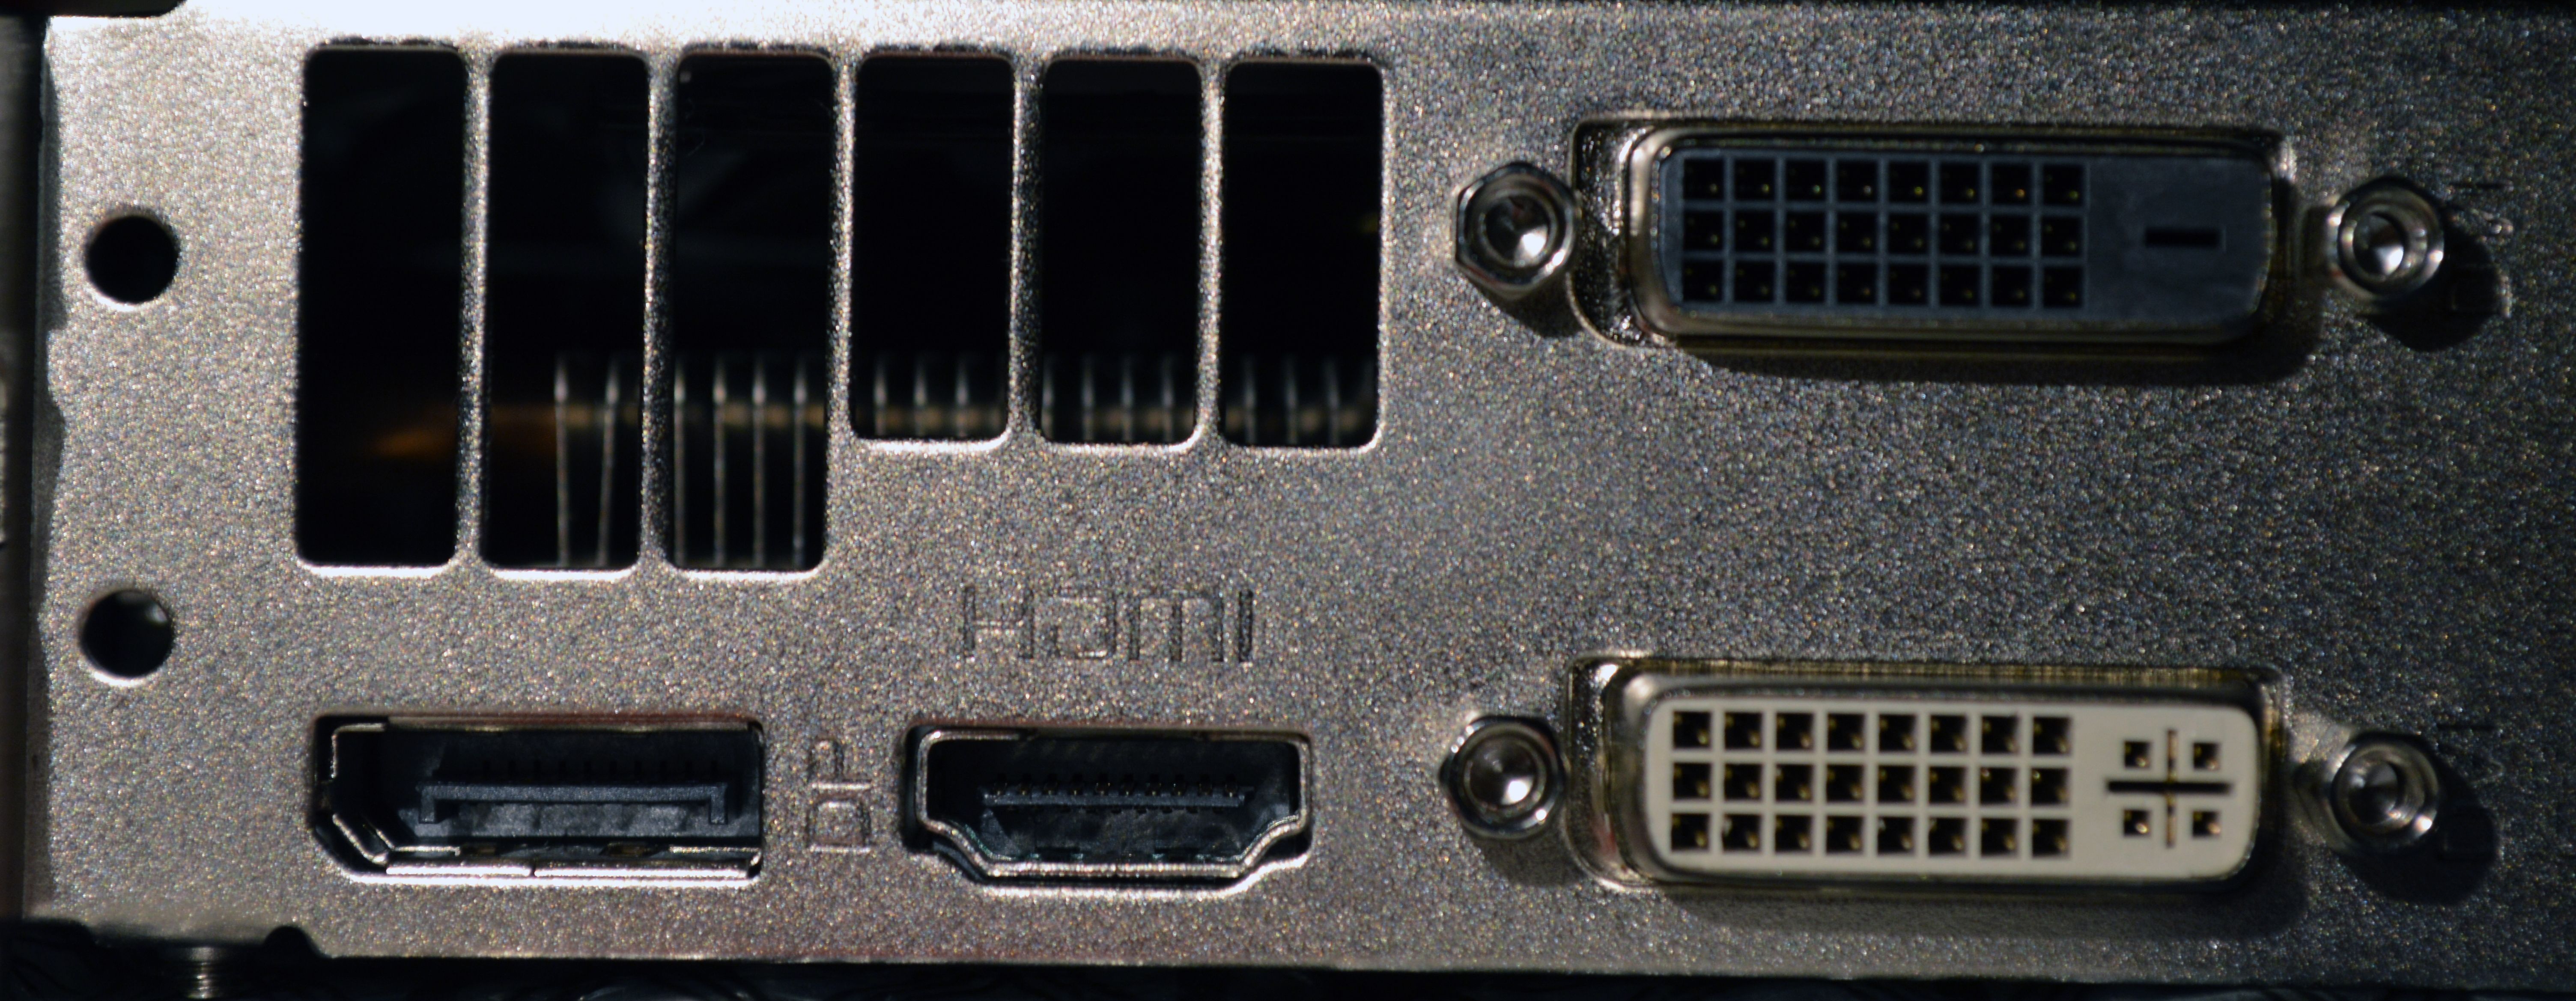 GPU ports